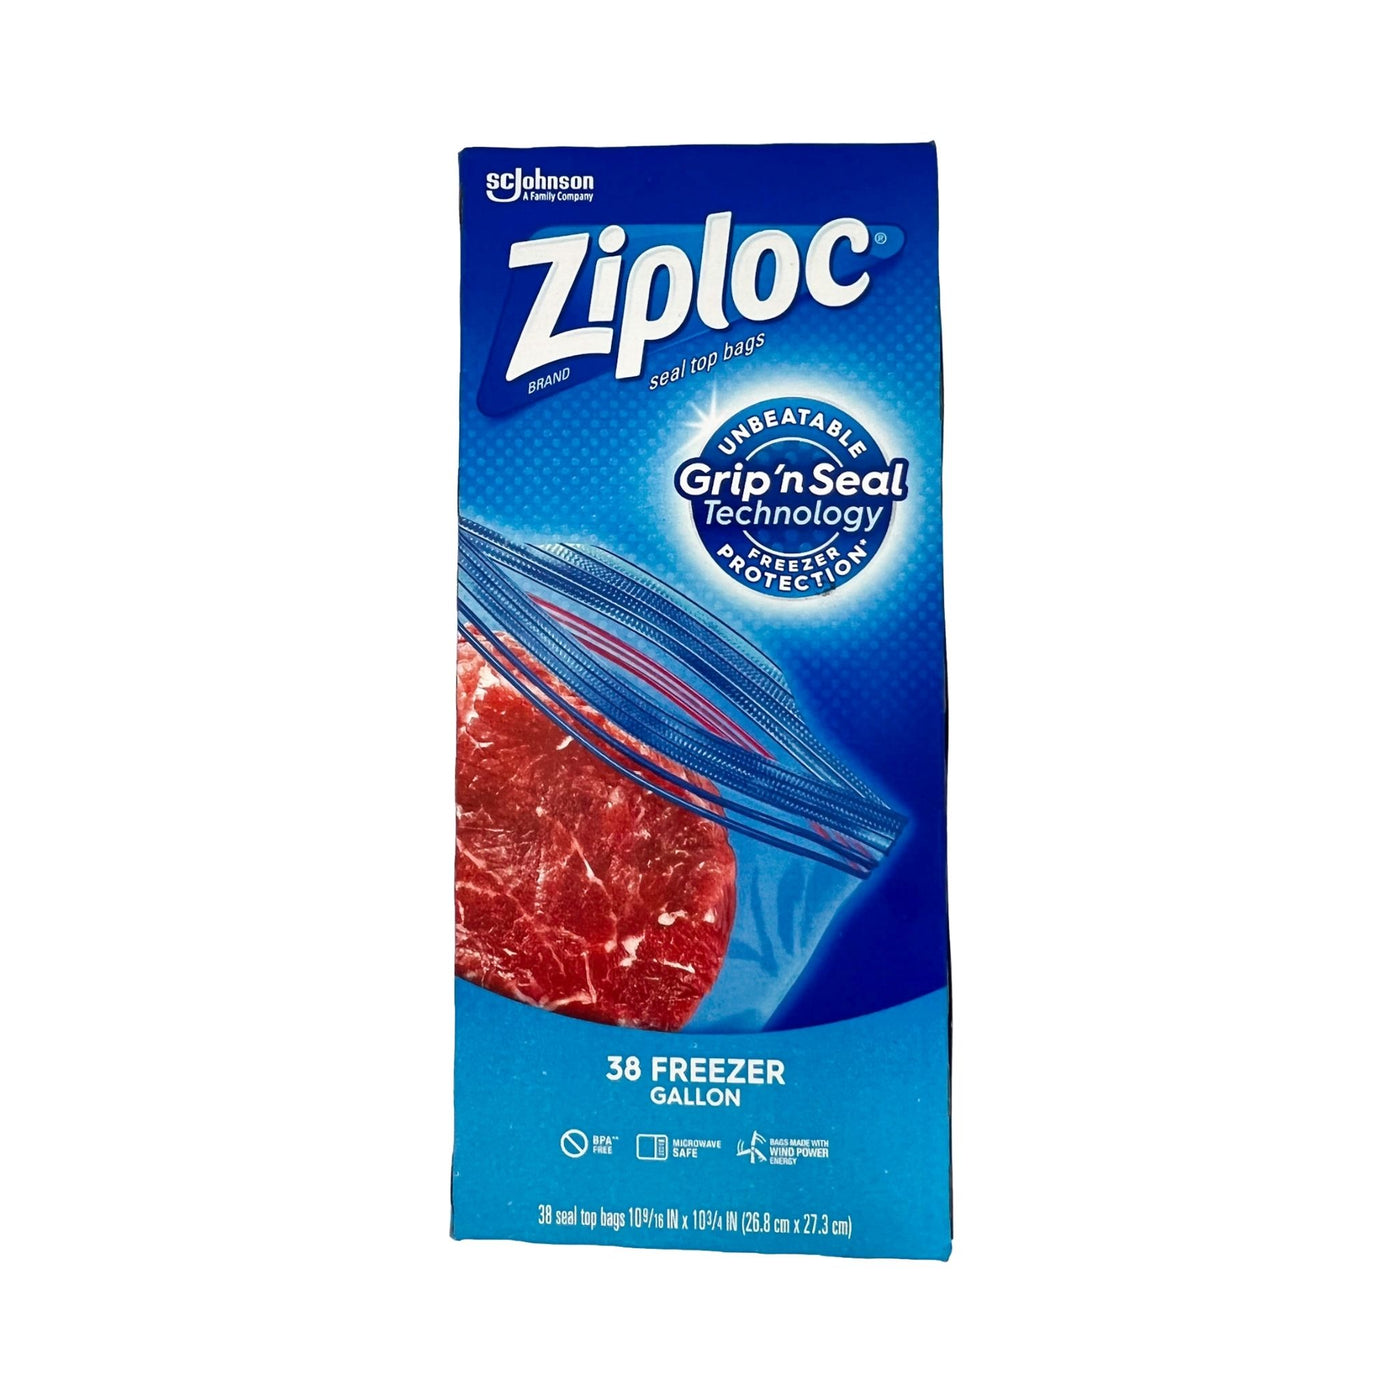 Ziploc Brand Freezer Quart Bags, with Grip 'n Seal Technology, 38